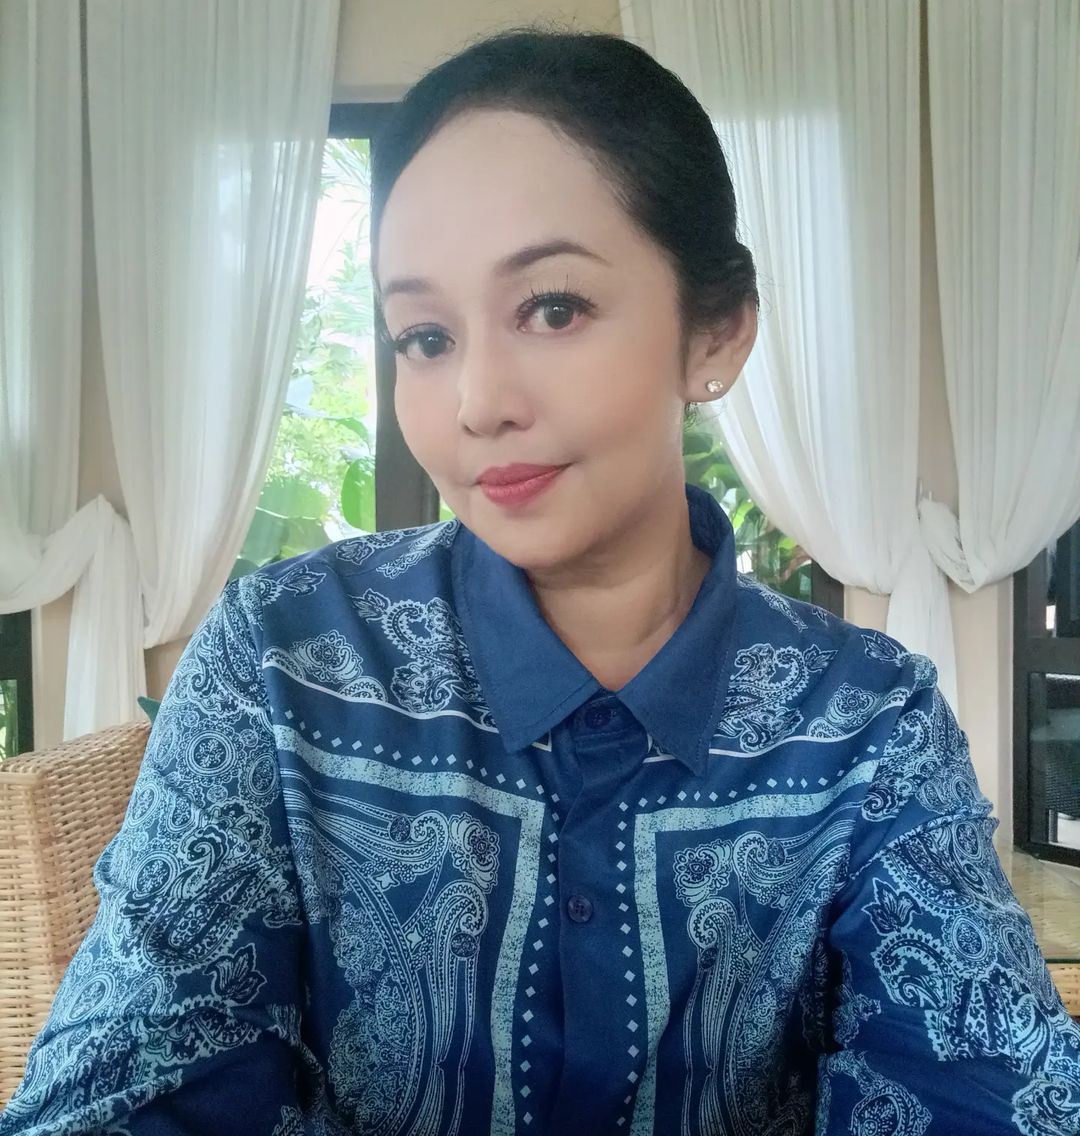 Suami Muda Dituduh Punca Masalah Jantung Jasmin, Netizen Diminta Henti Kecaman 3